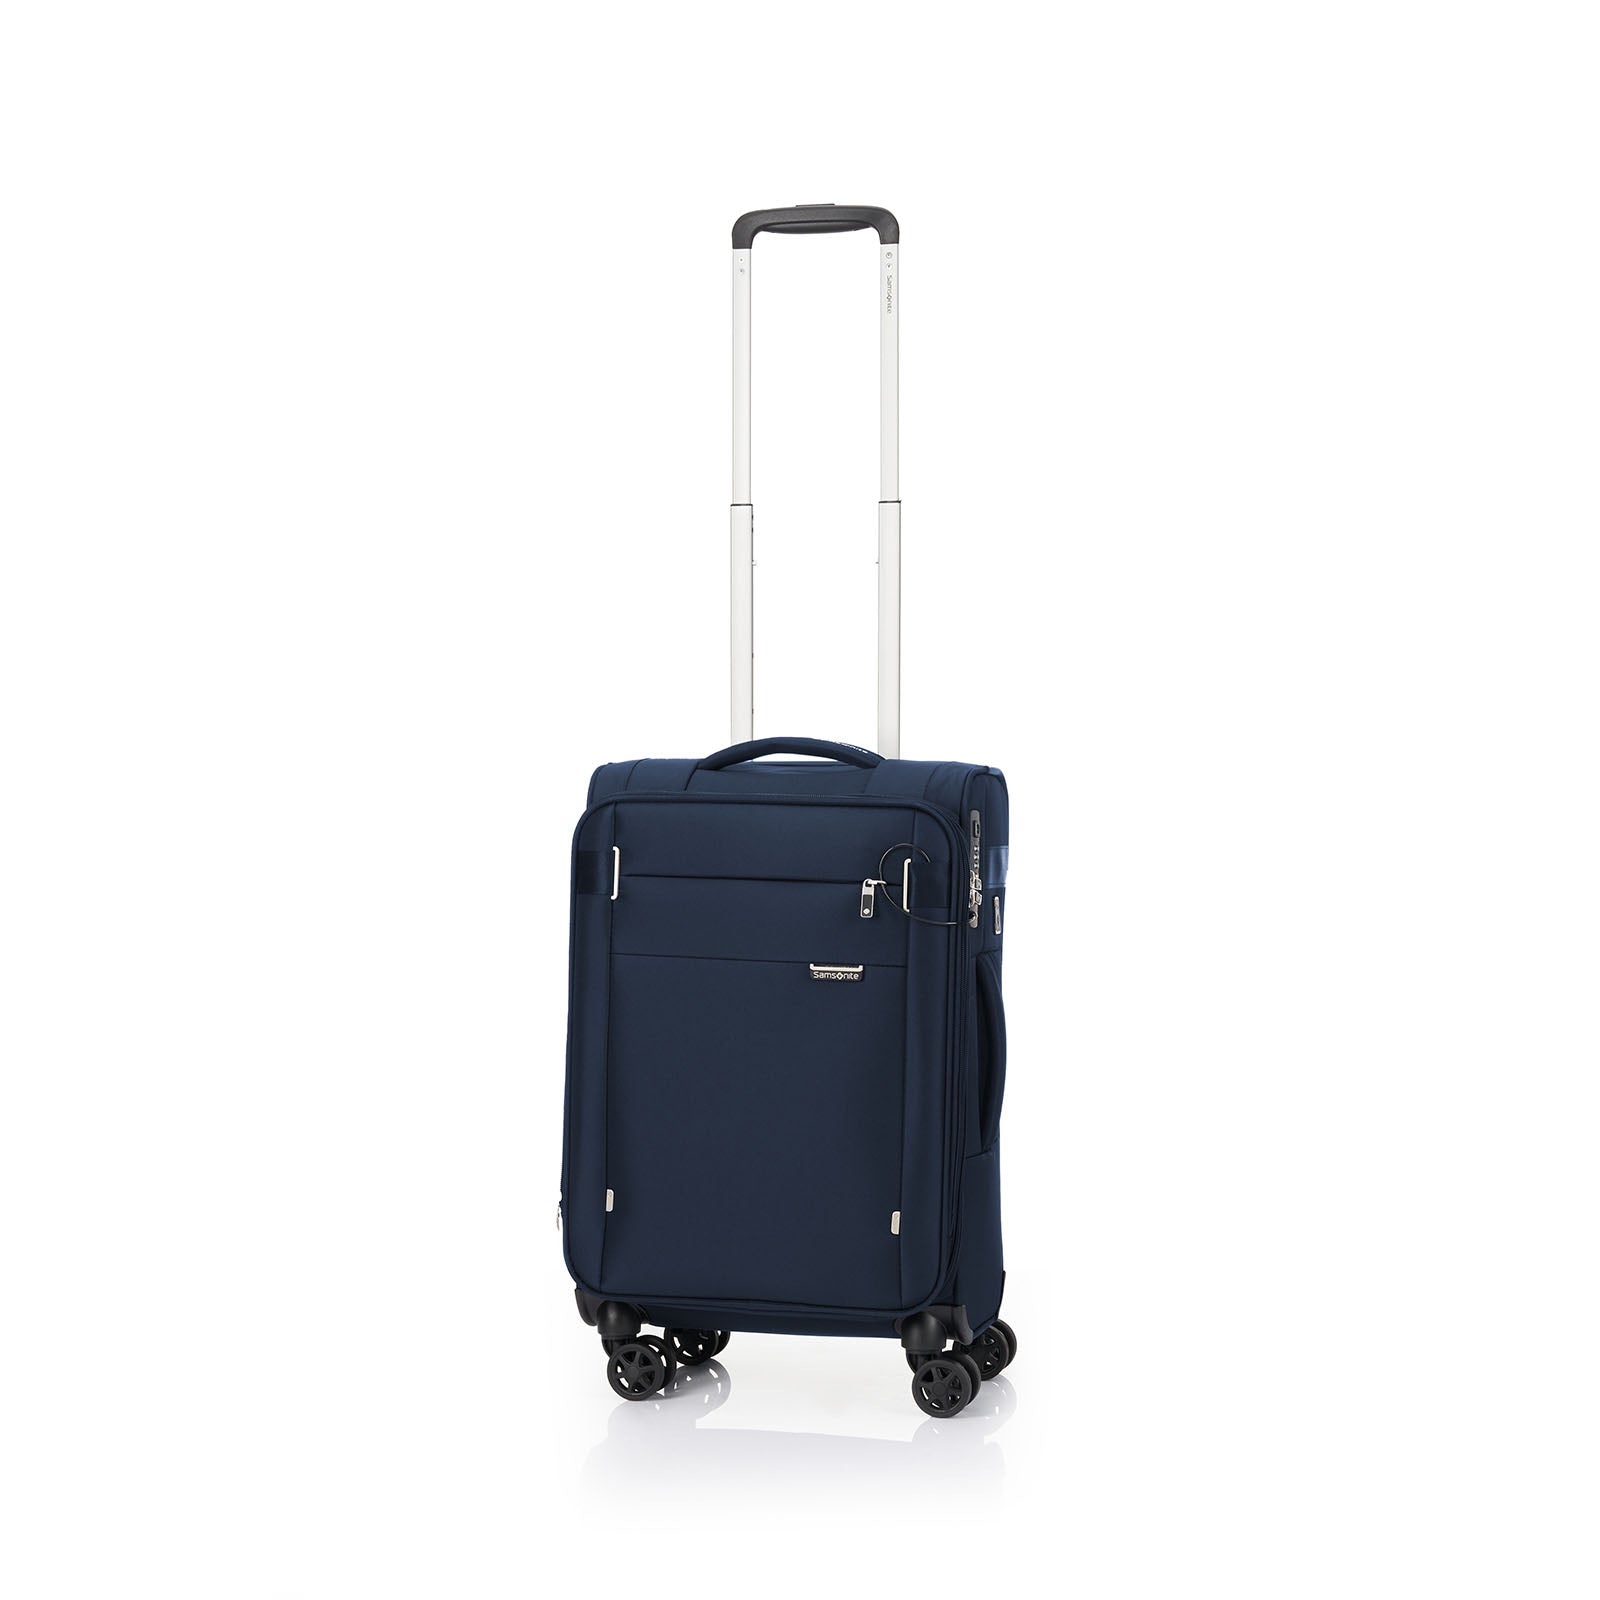 Samsonite-City-Rhythm-Carry-On-55cm-Suitcase-Navy-Front-Angle